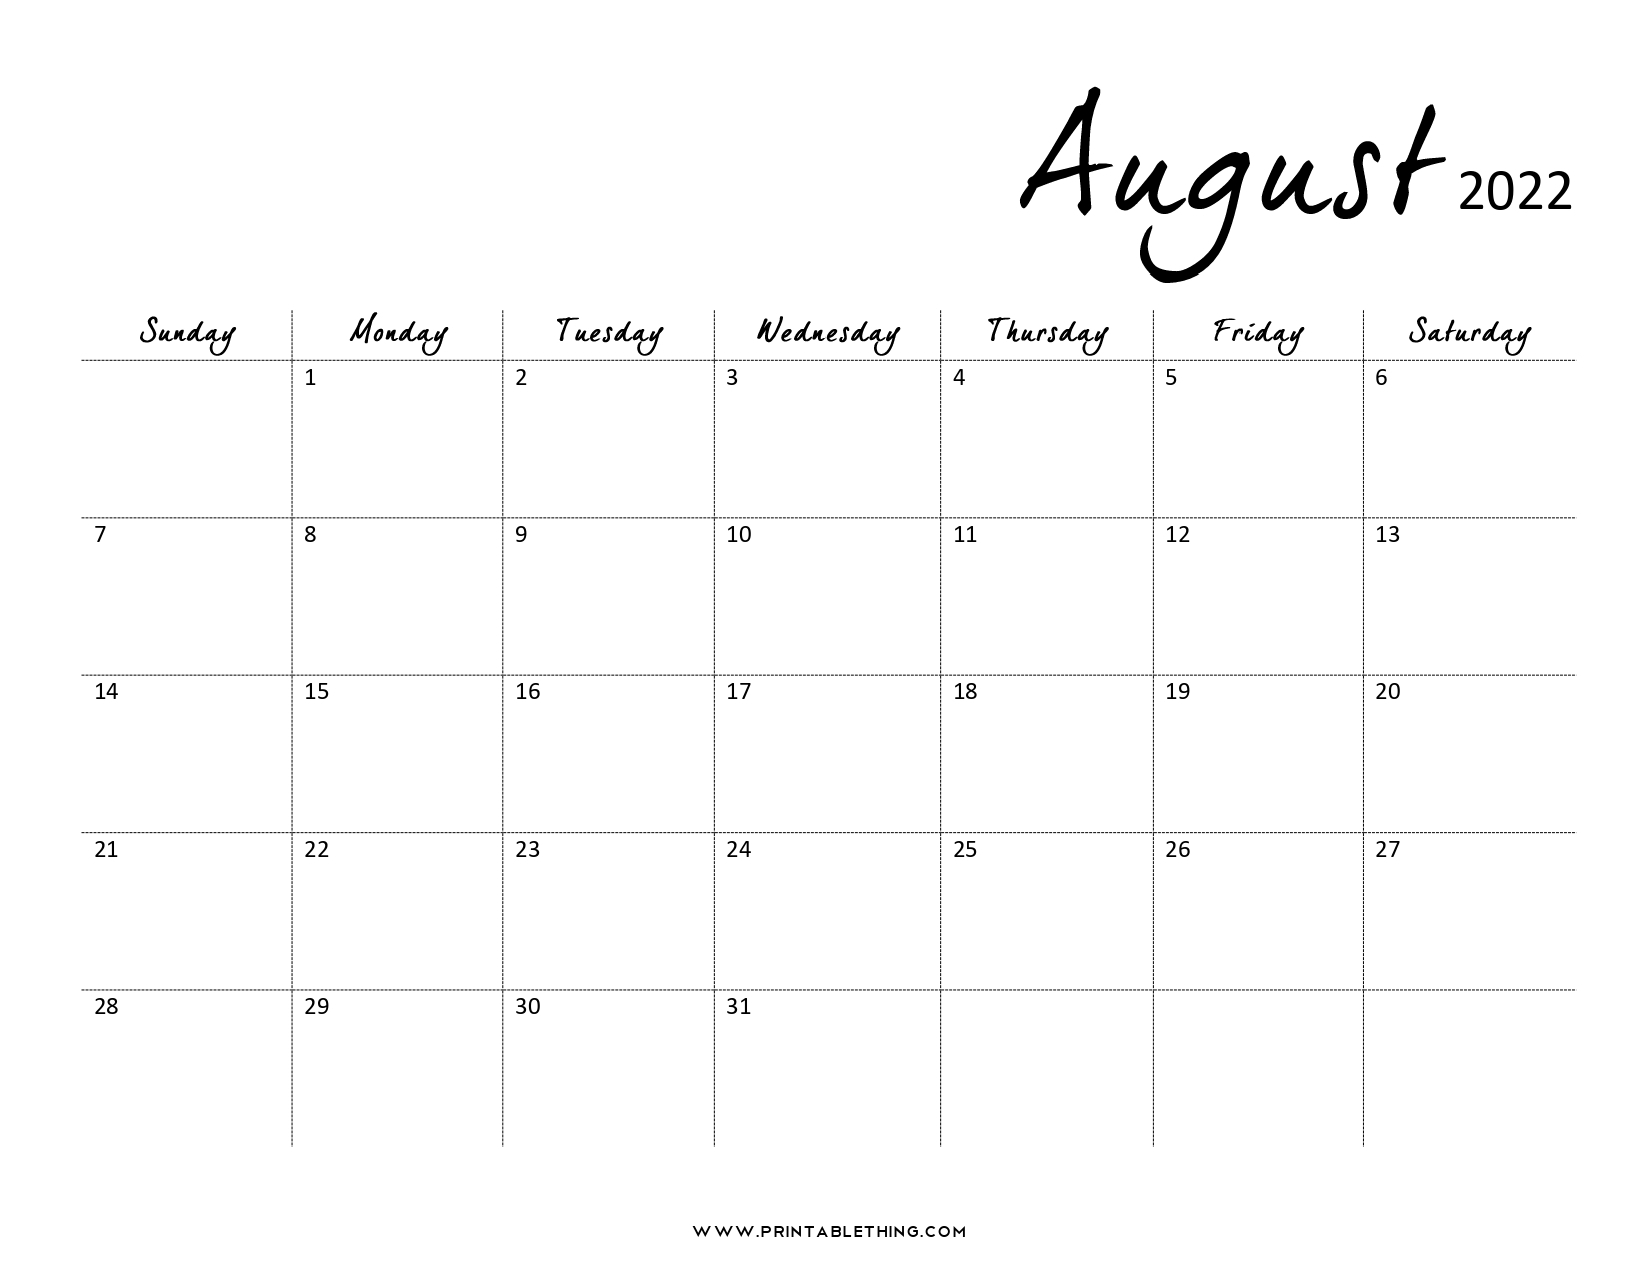 Take Calendar 2022 Luna August